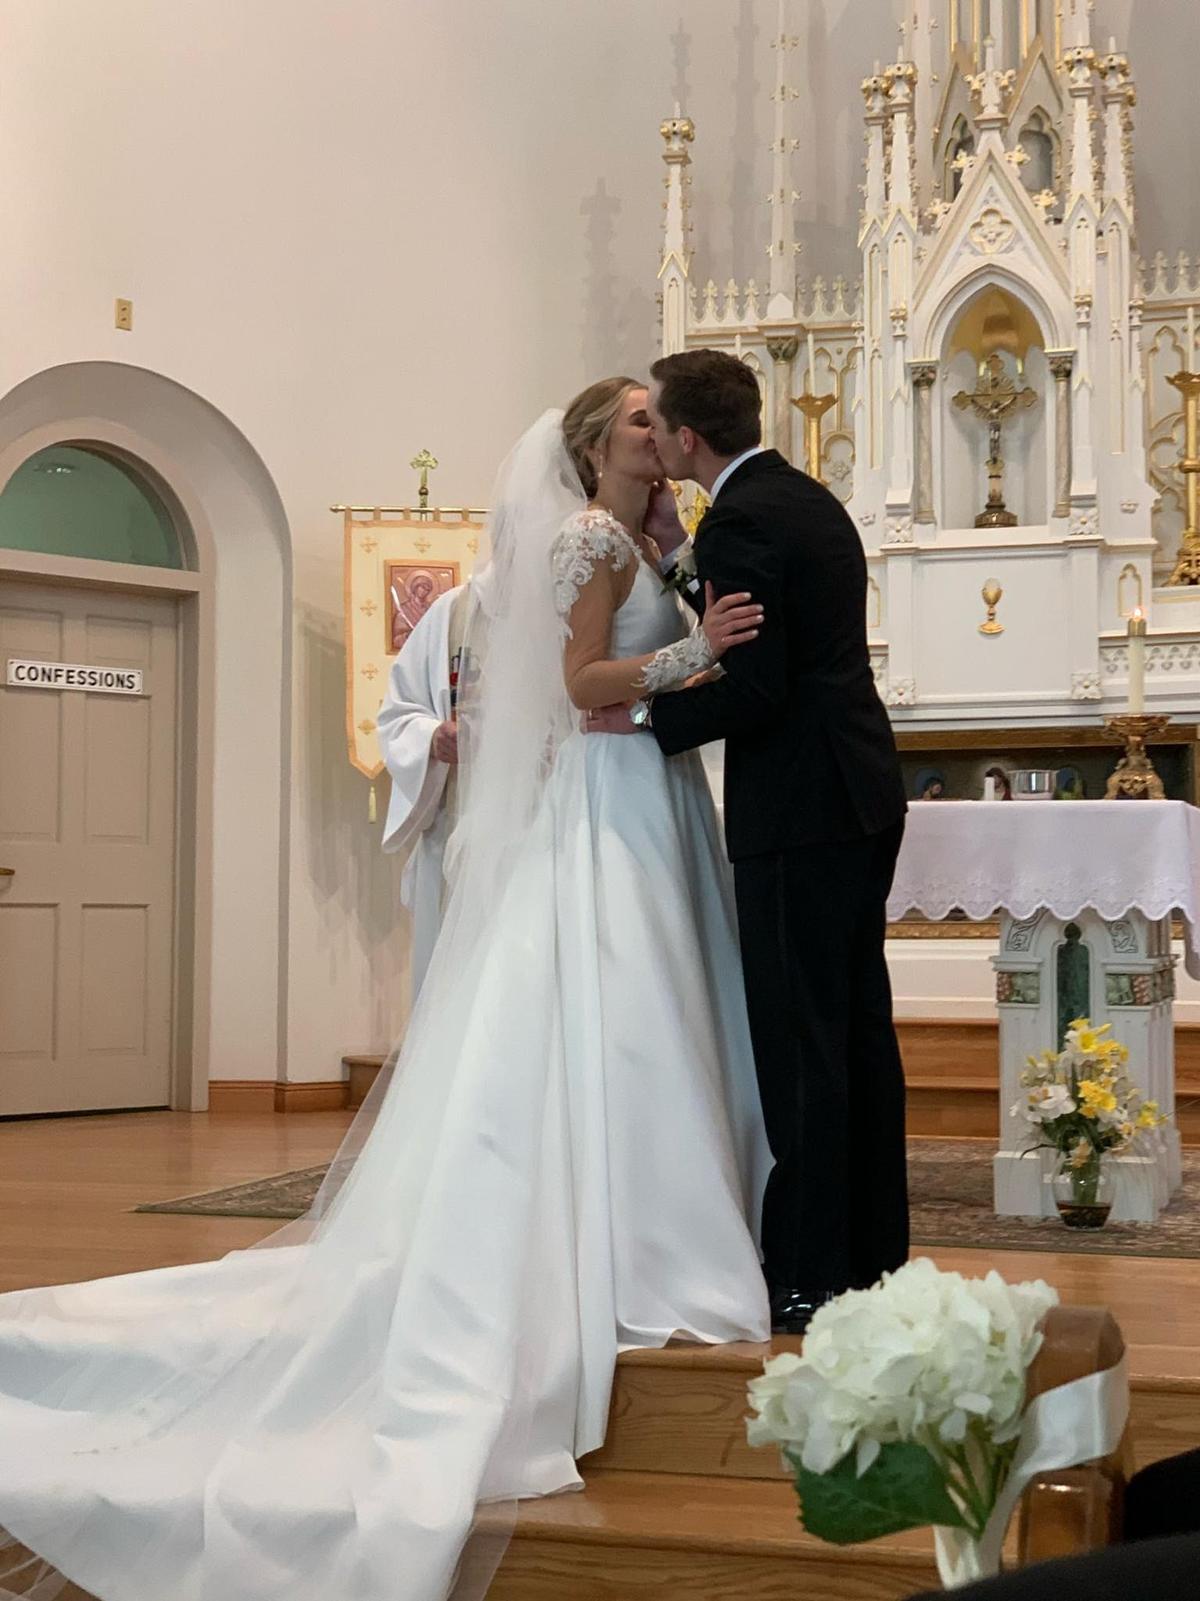 Jack and Elizabeth at their wedding ceremony. (Courtesy of Susan Weatherhead via <a href="https://www.facebook.com/jake.landuyt">Jake Landuyt</a>)